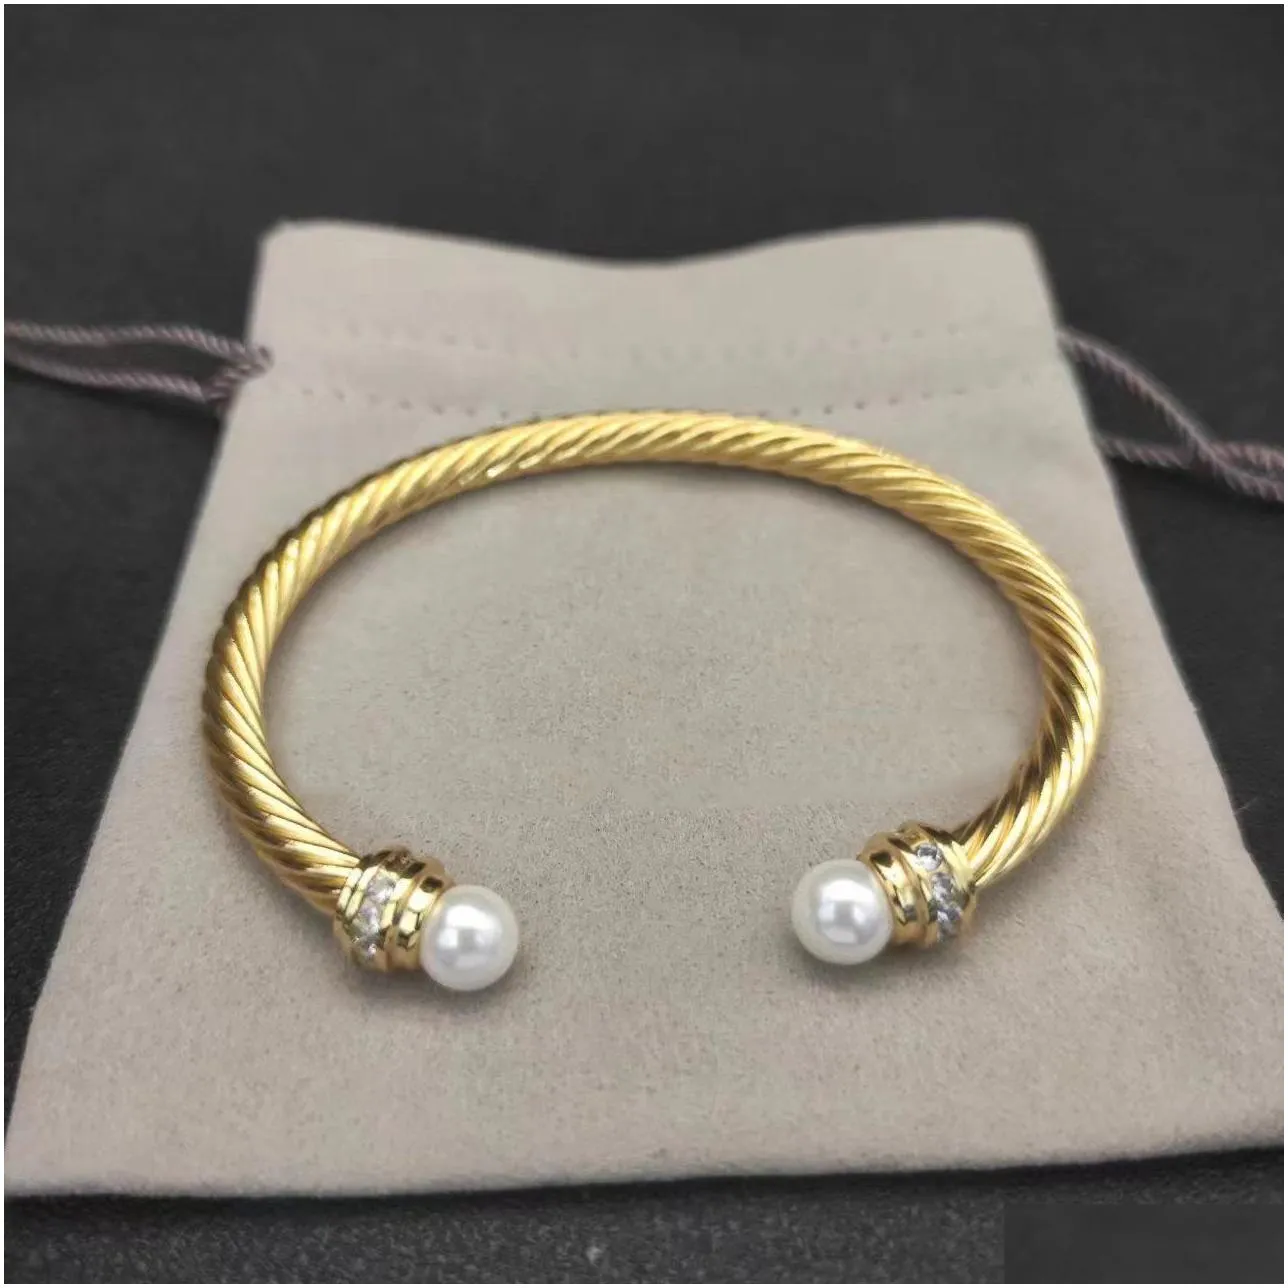 DY twisted bracelet classic luxury bracelets designer for women fashion jewelry gold silver Pearl cross diamond hip hot jewelry party wedding gift